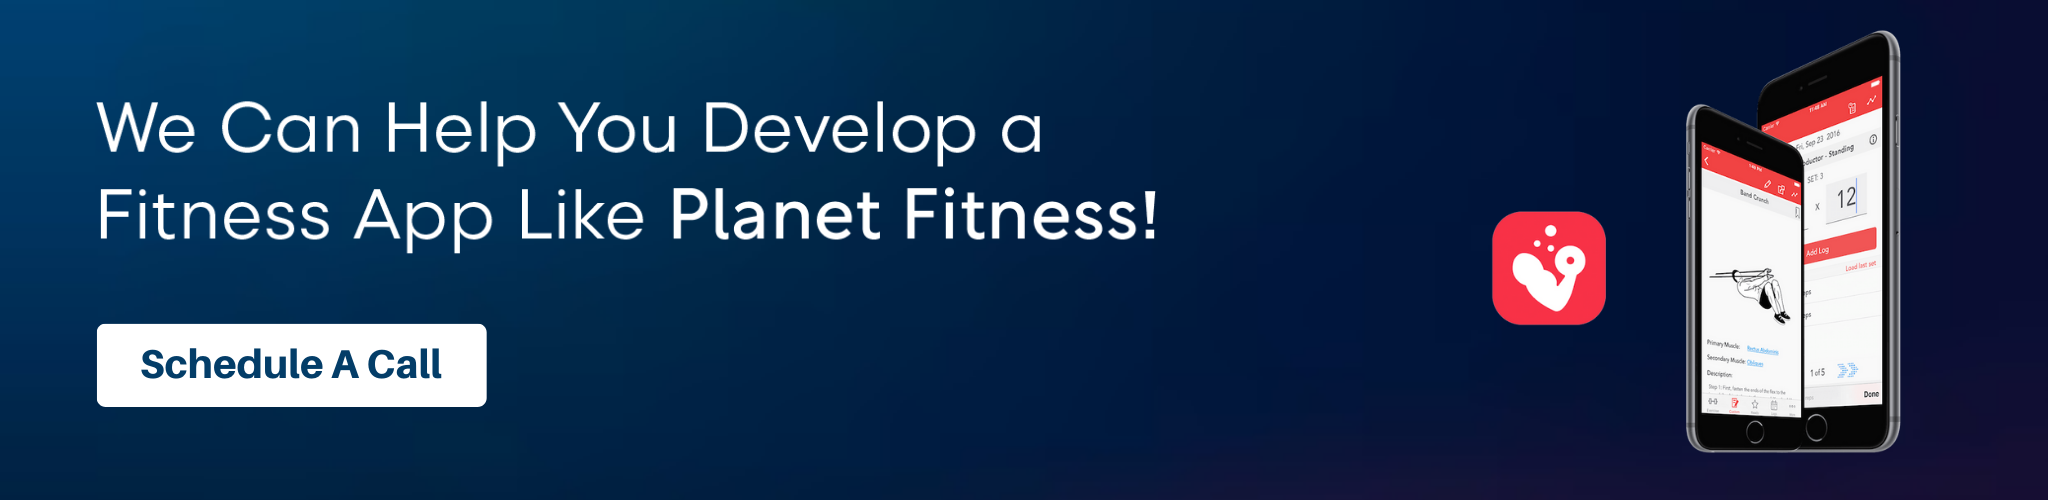 App Like Planet Fitness App